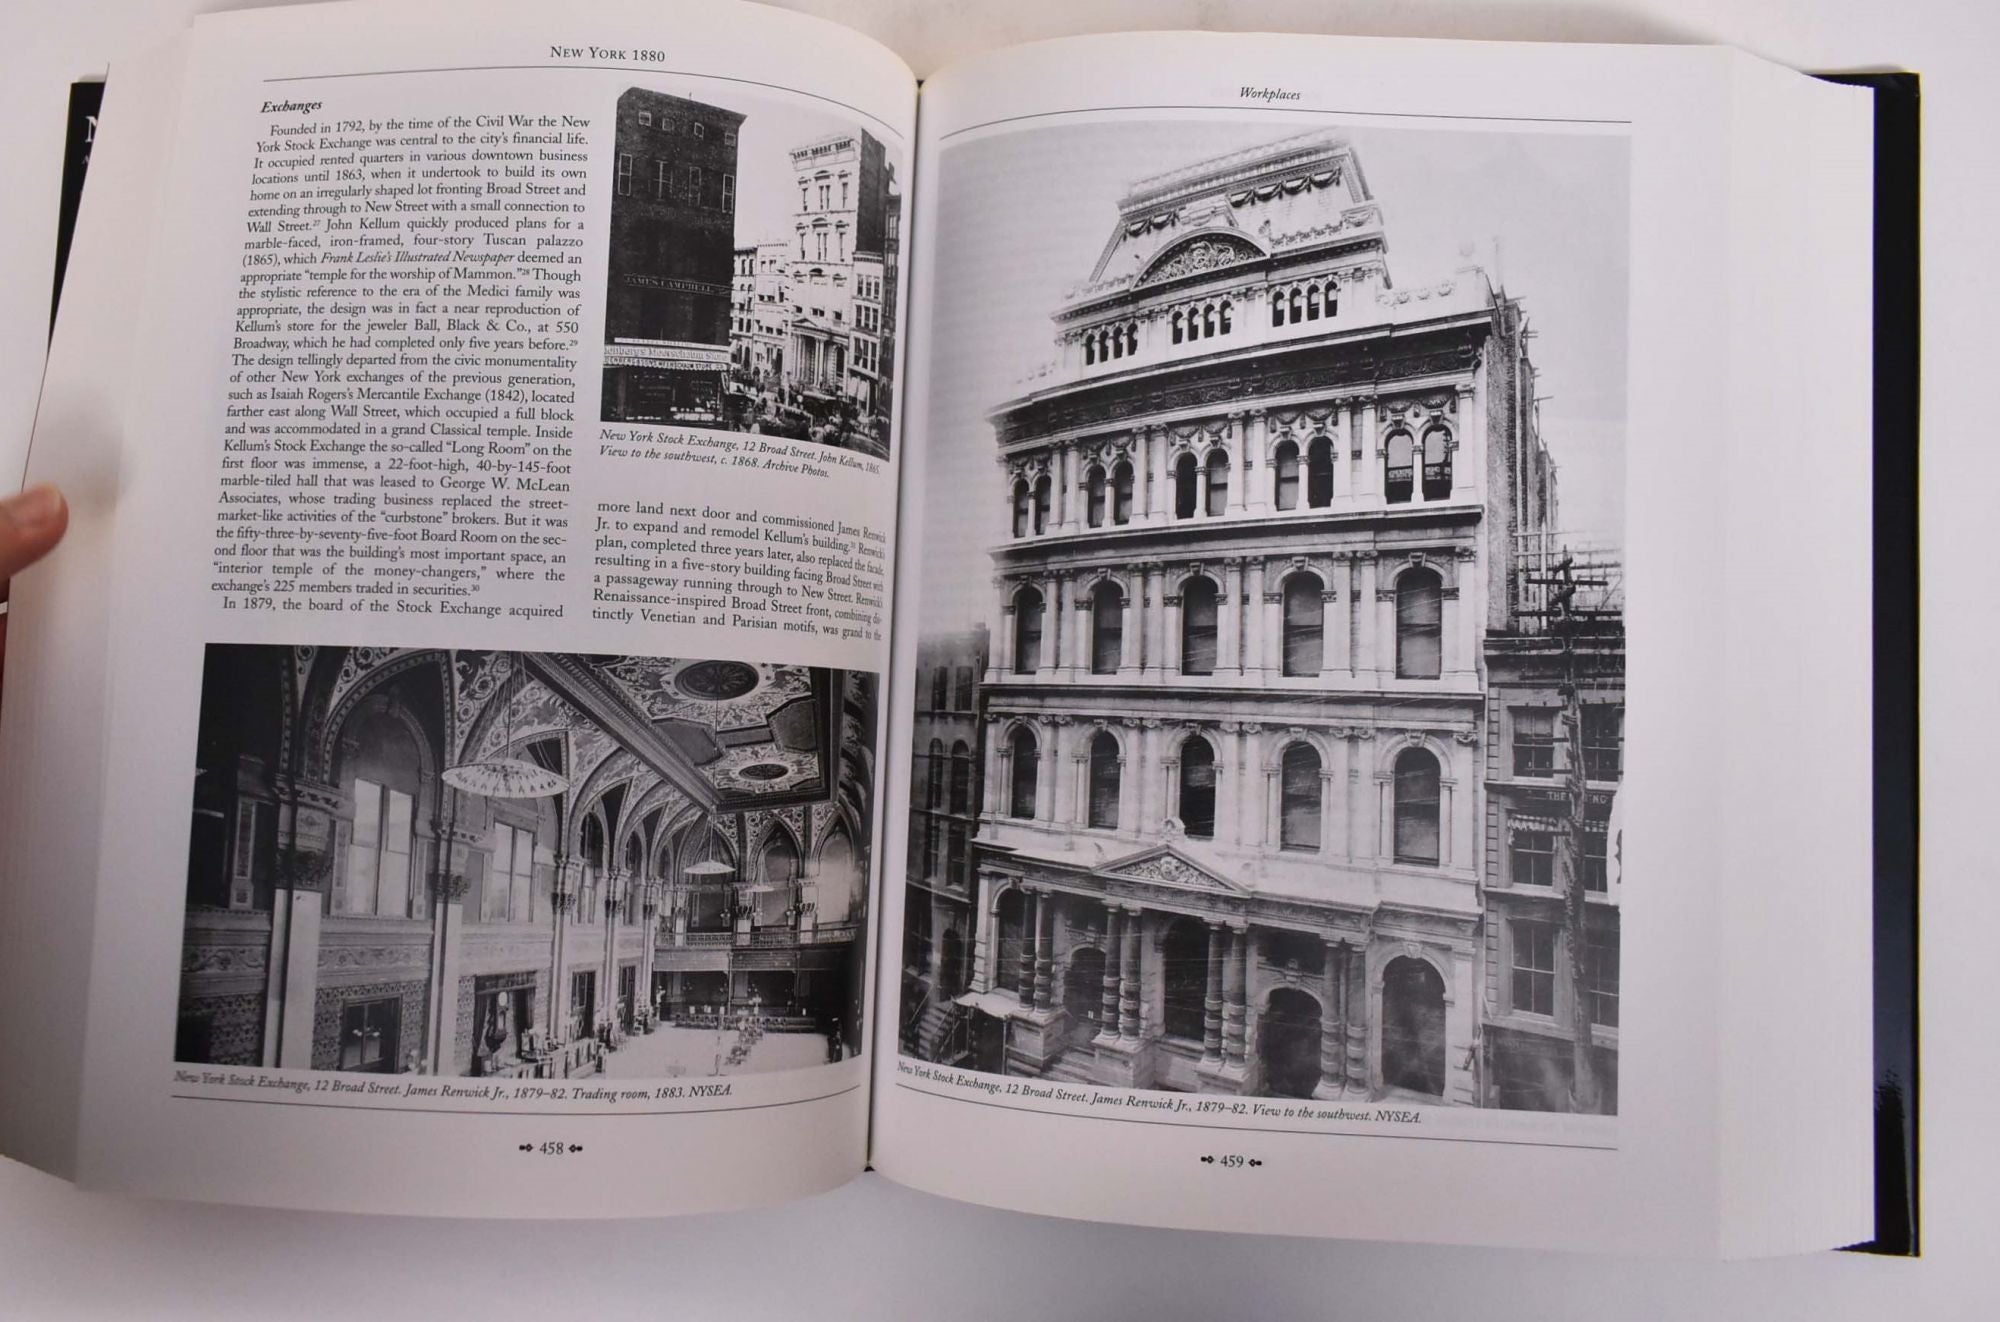 NEW YORK 1900 ING: Metropolitan Architecture and Urbanism, 1890